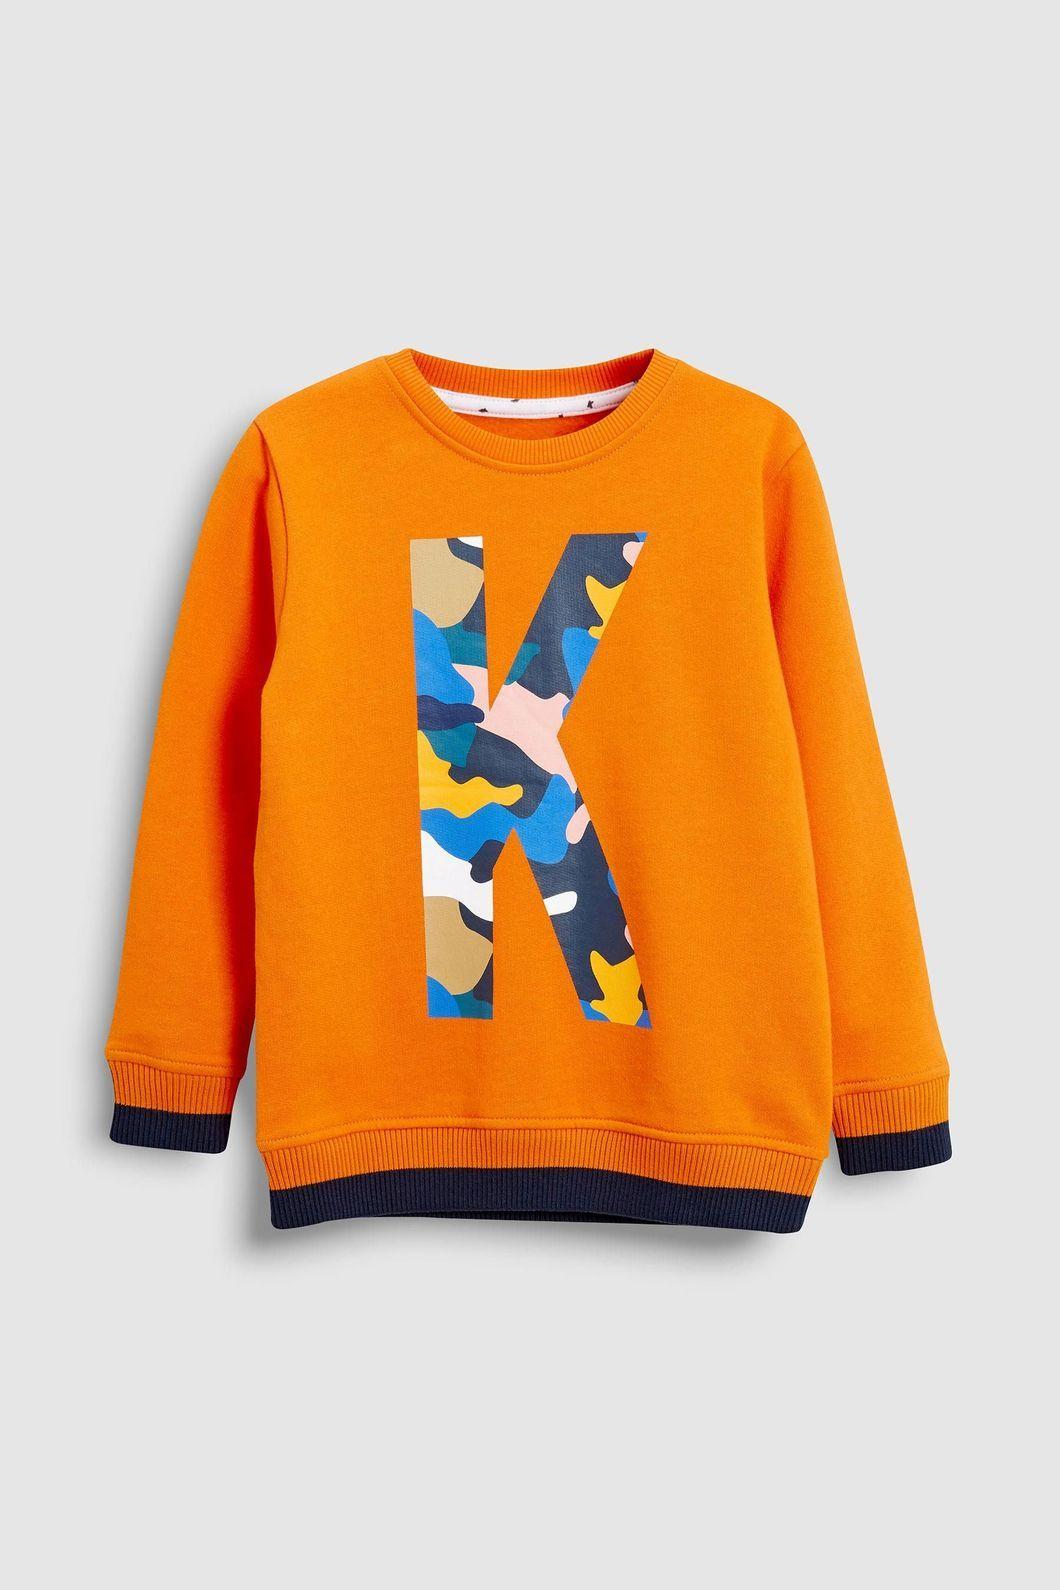 Orange Clothing Logo - Kimba Kids by Kimberley Walsh Orange K Logo Sweatshirt